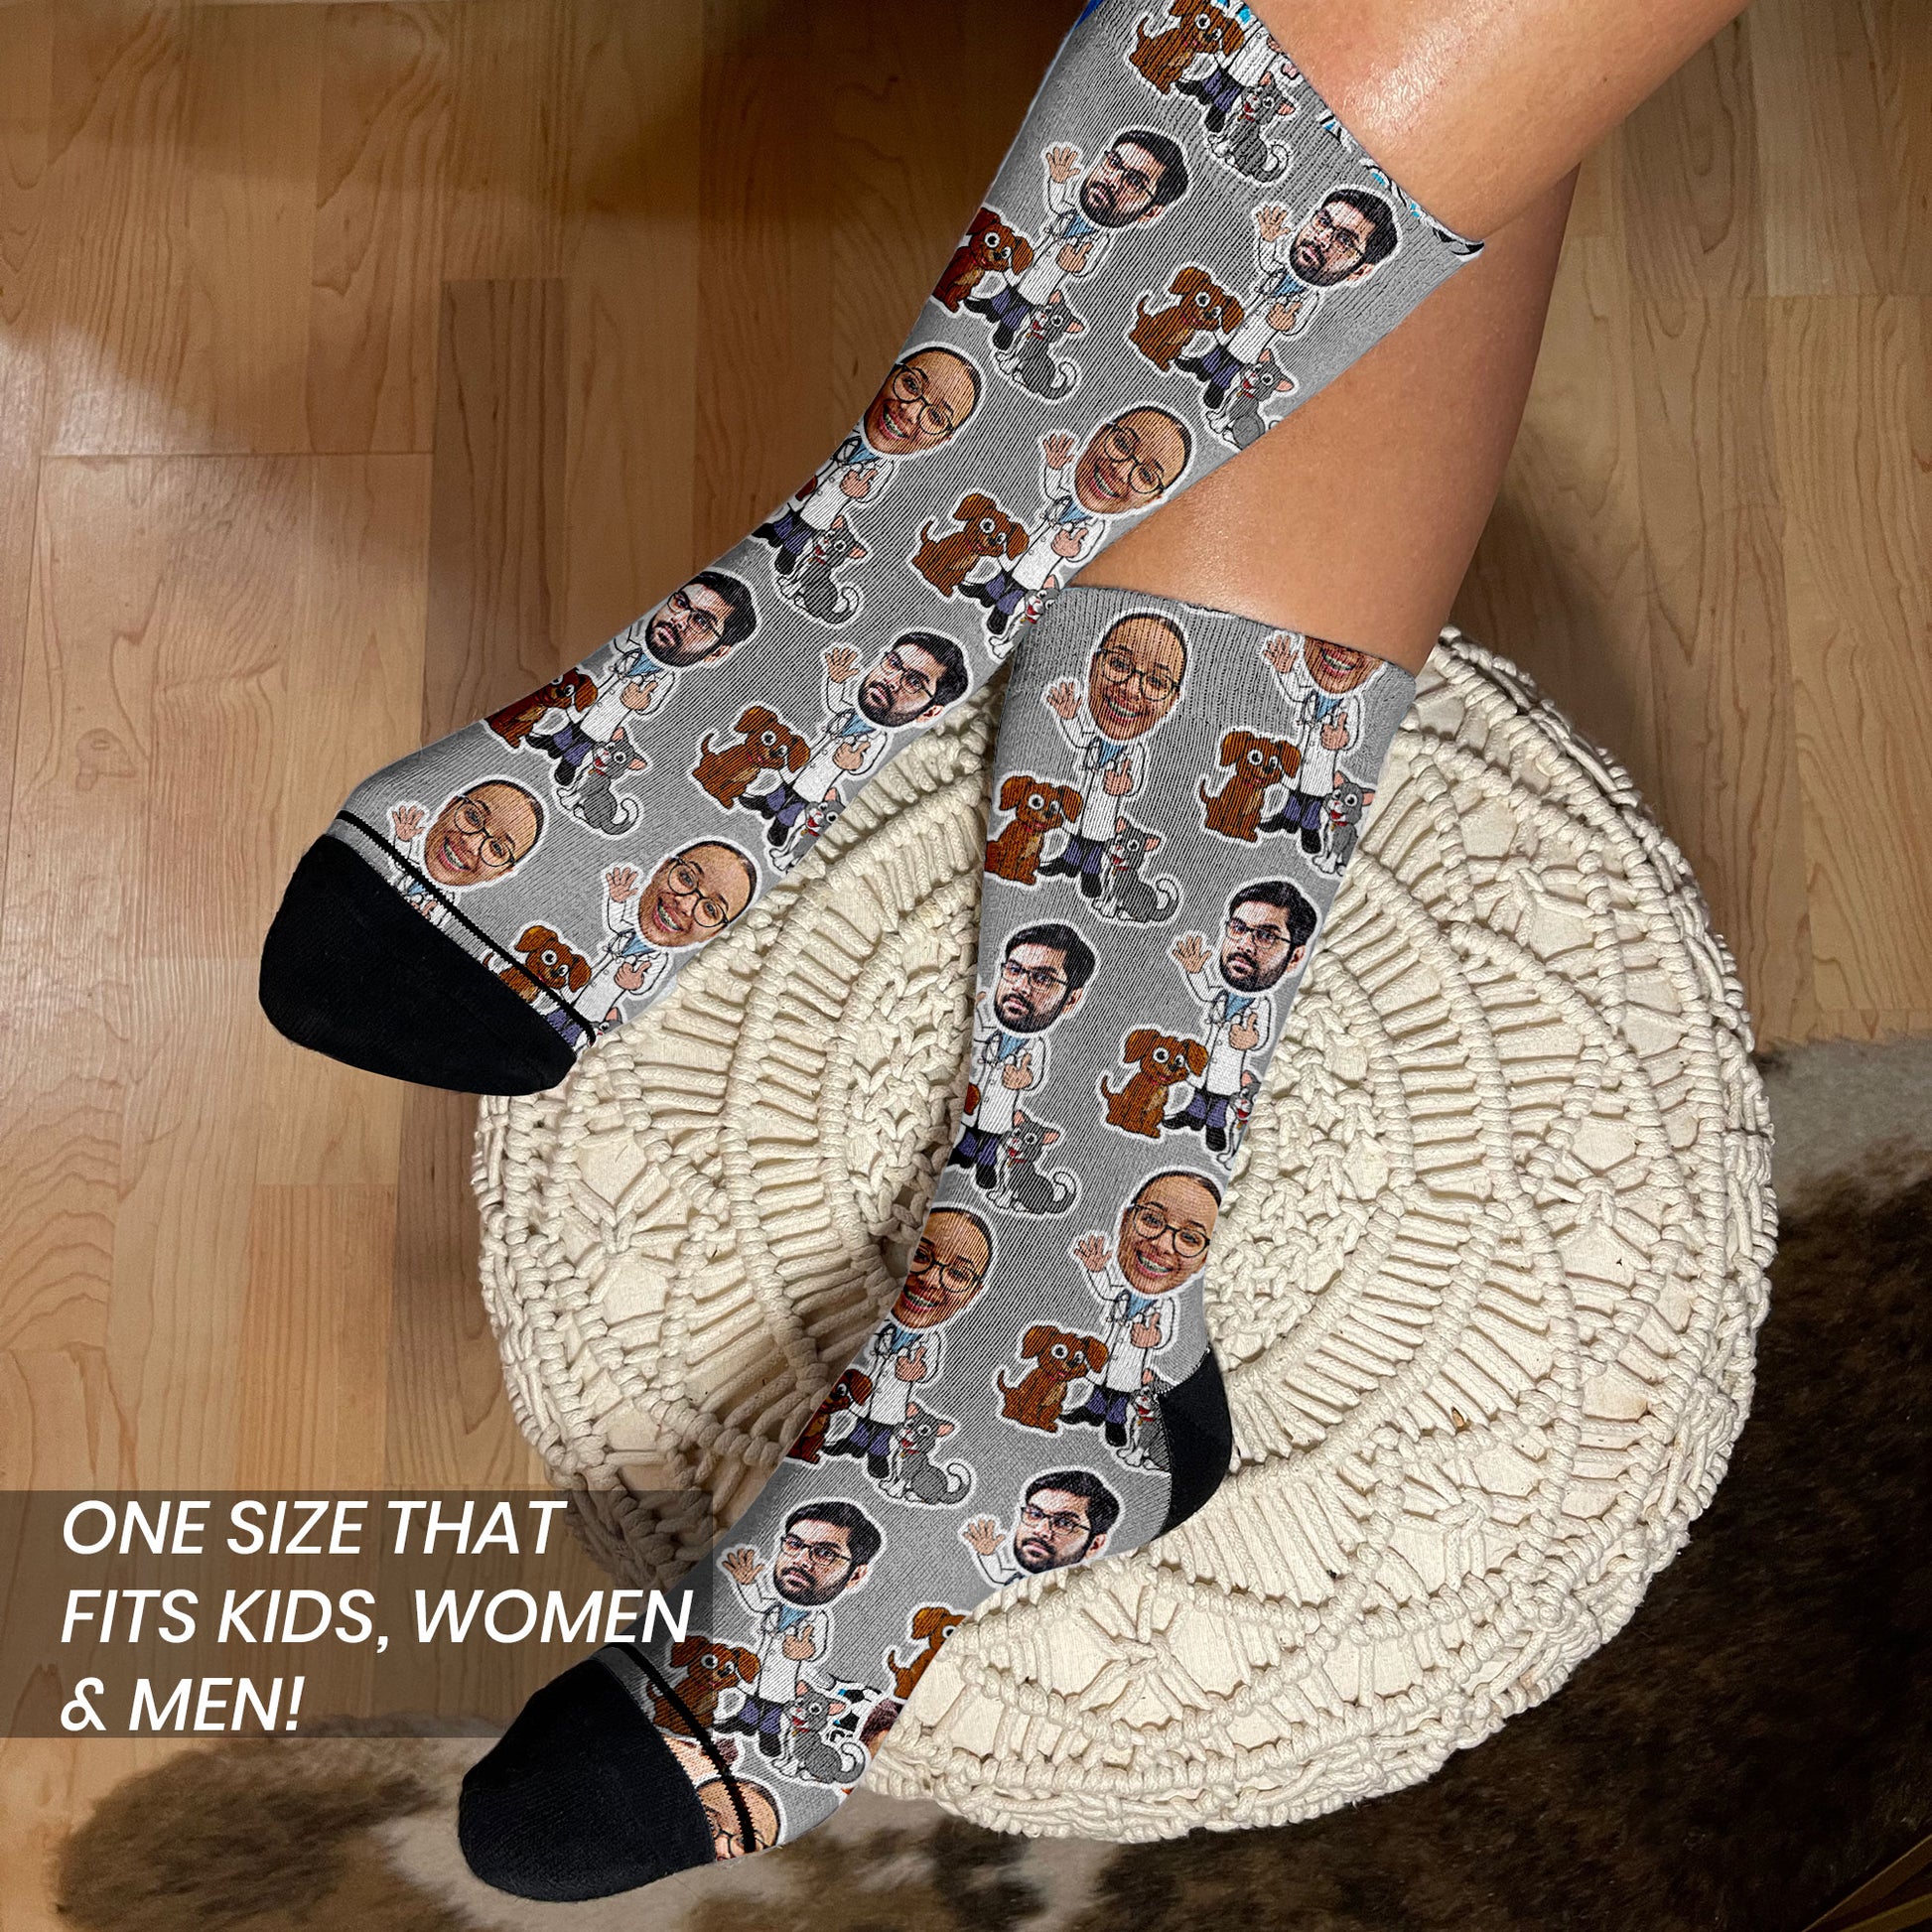 personalized vet socks on women's feet